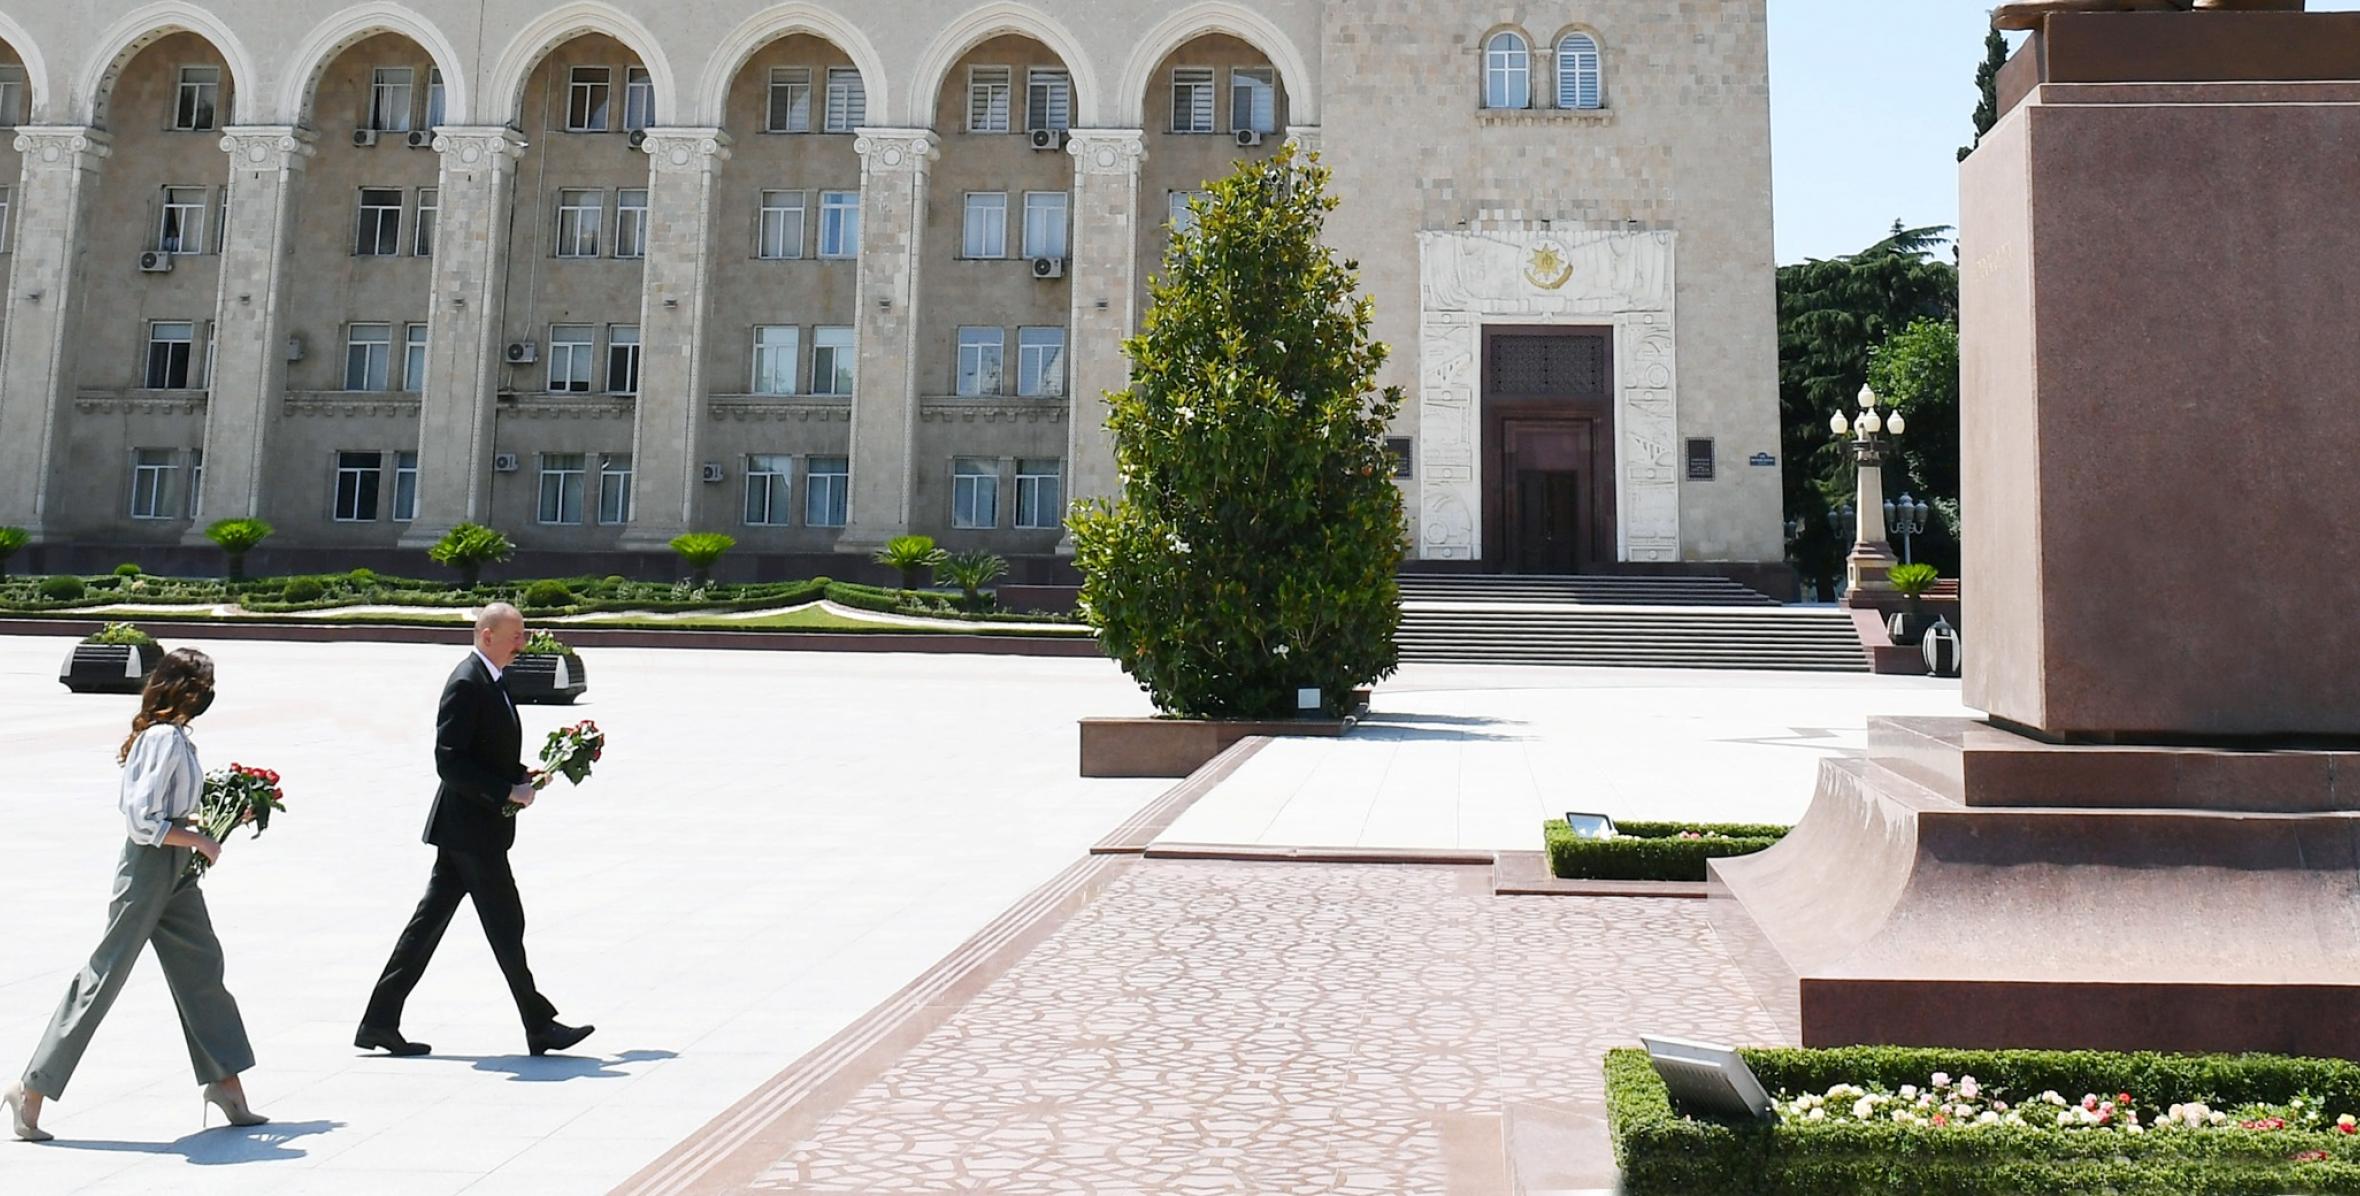 Ilham Aliyev arrived in Ganja city for visit